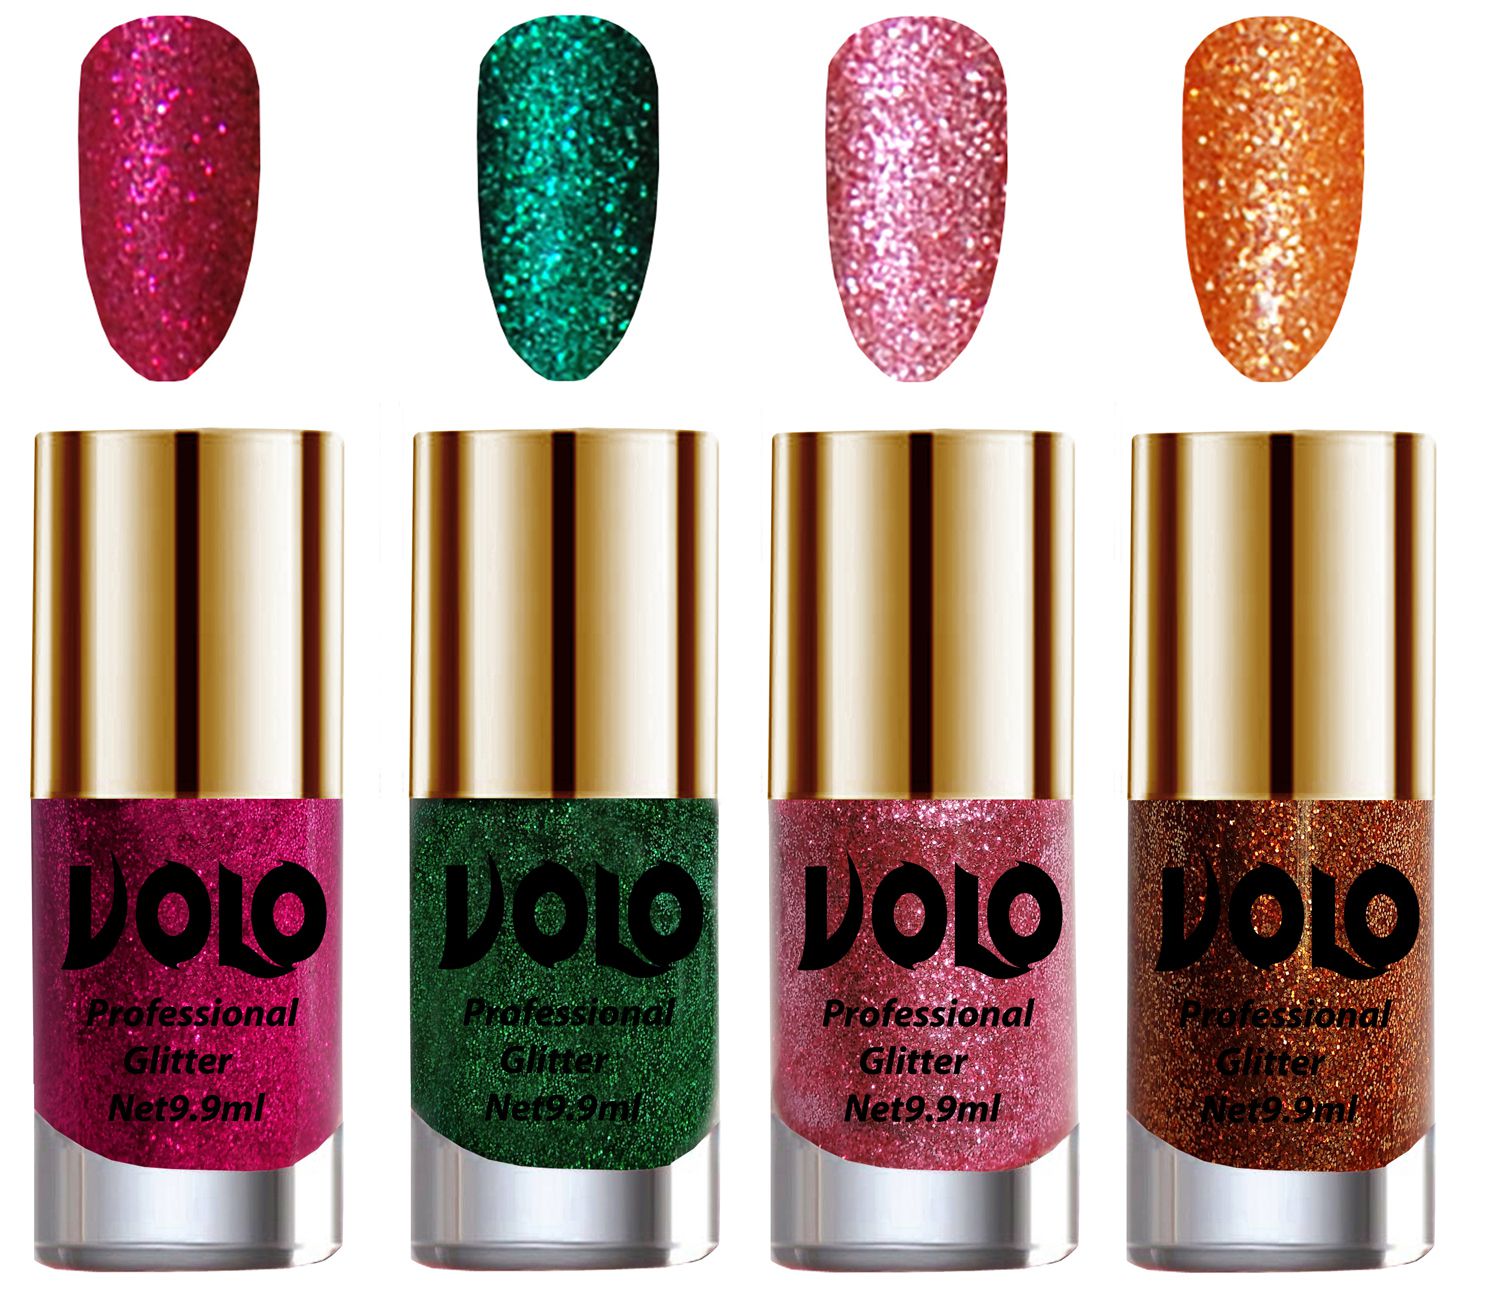     			VOLO Professionally Used Glitter Shine Nail Polish Magenta,Green,Pink Orange Pack of 4 39 mL